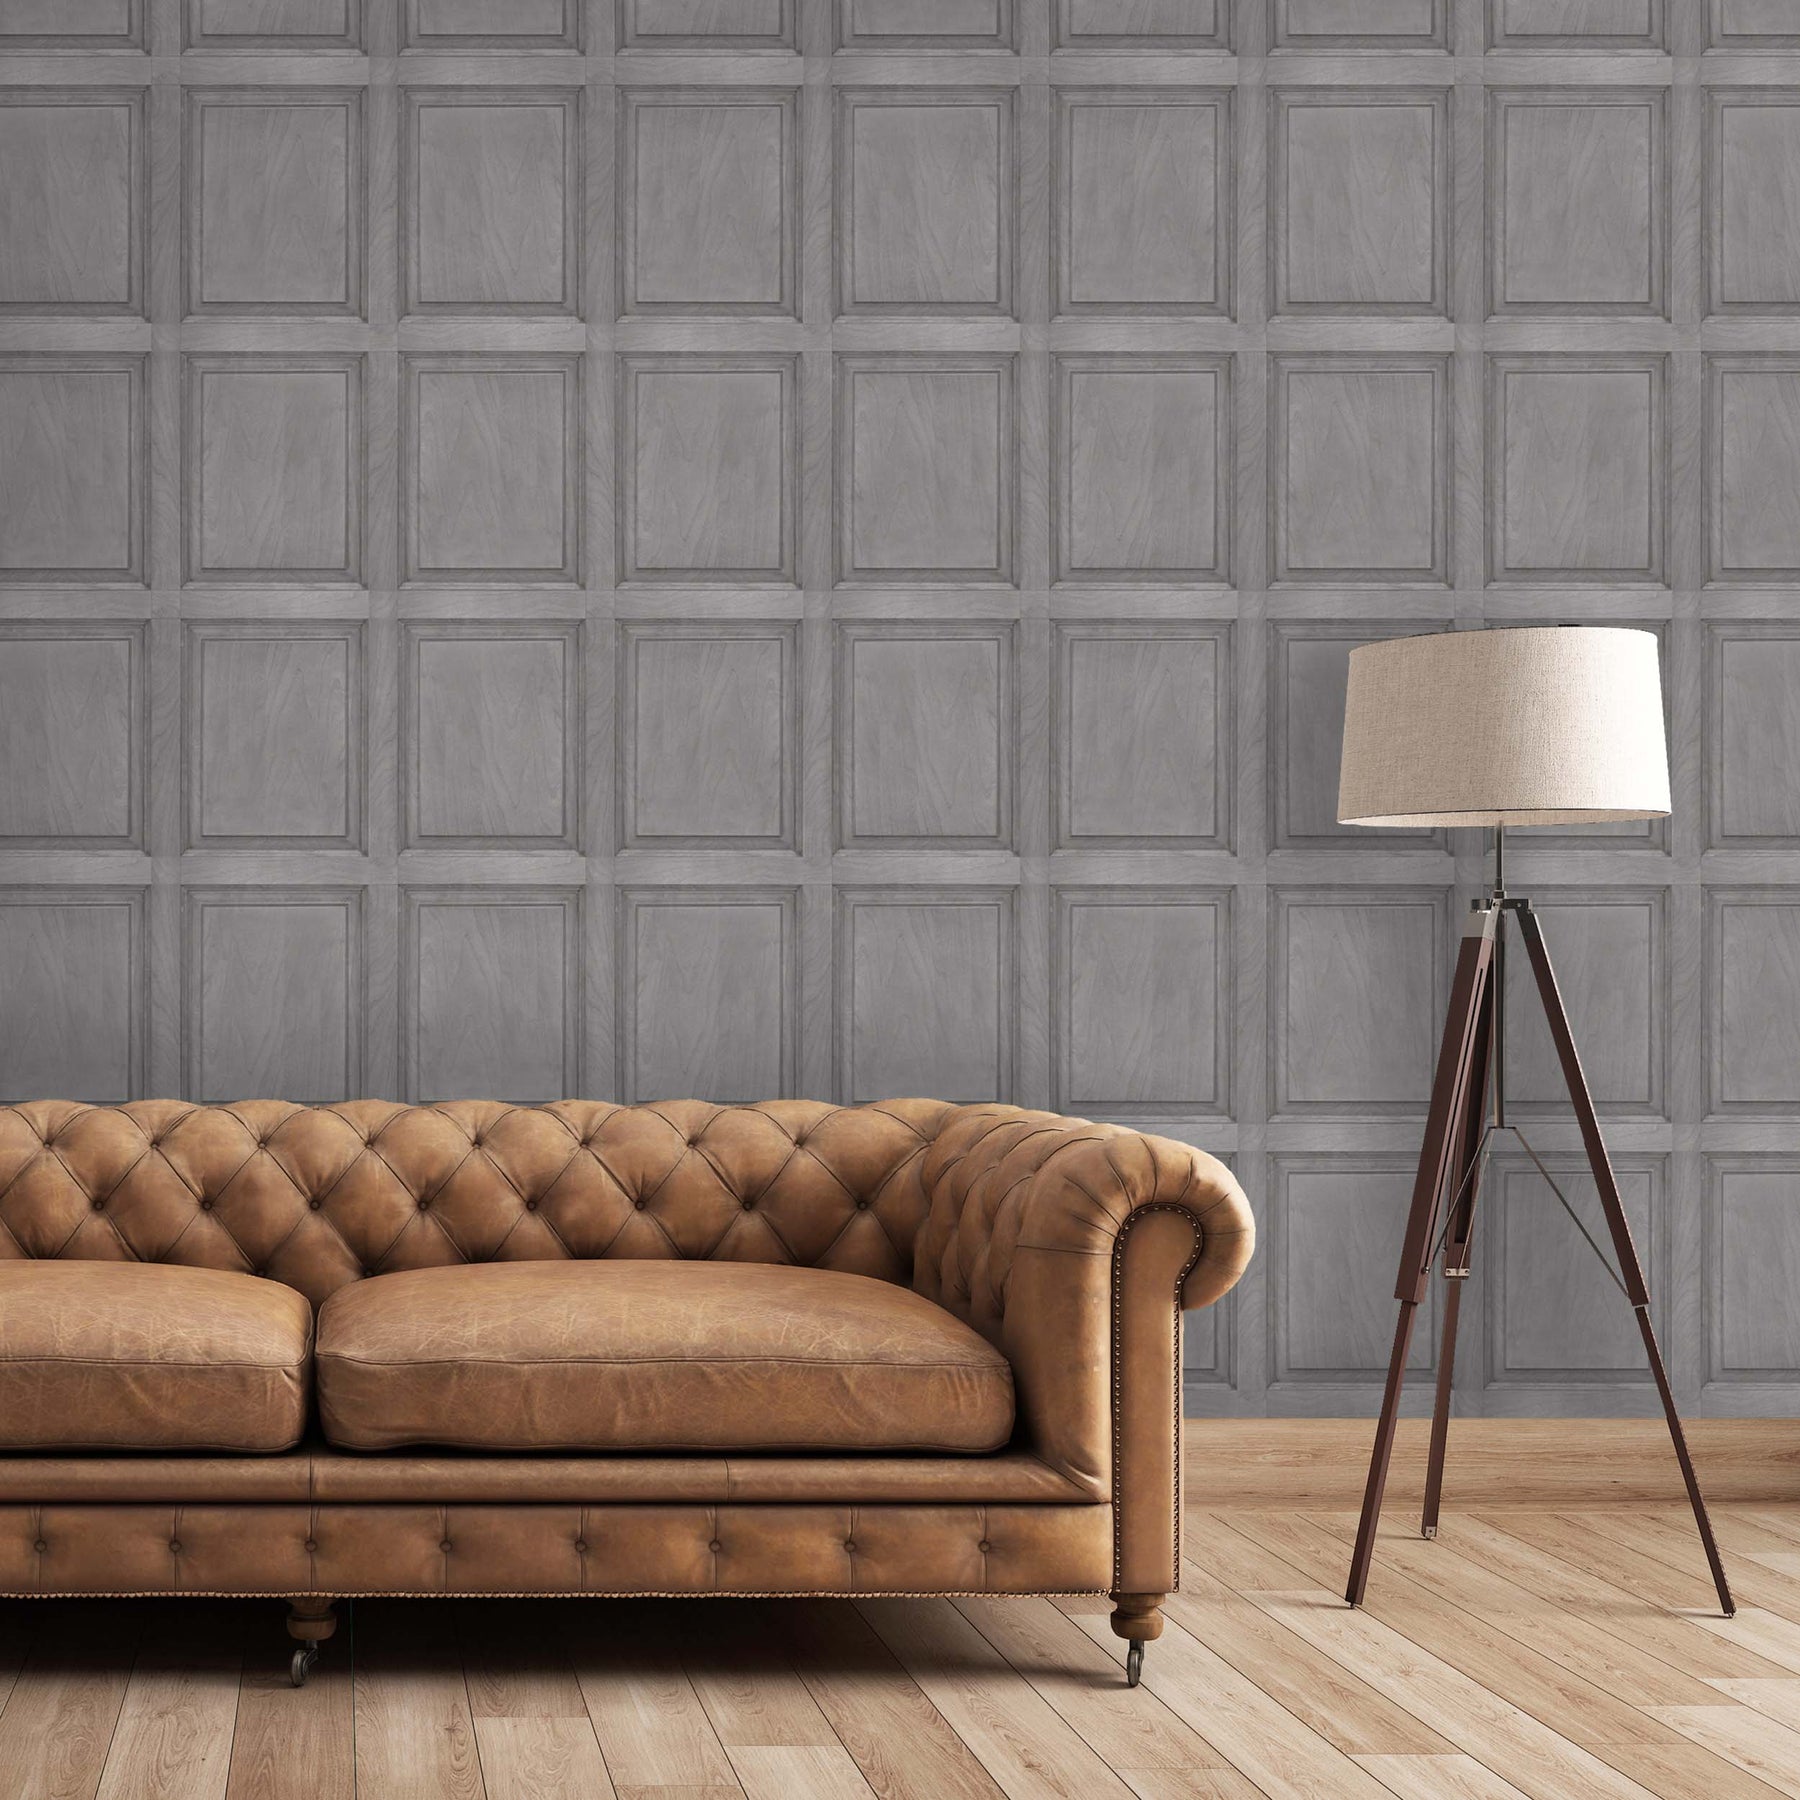 Marble Wood Panel Effect Wallpaper Geometric - Grey, Pink, Green, Teal |  eBay